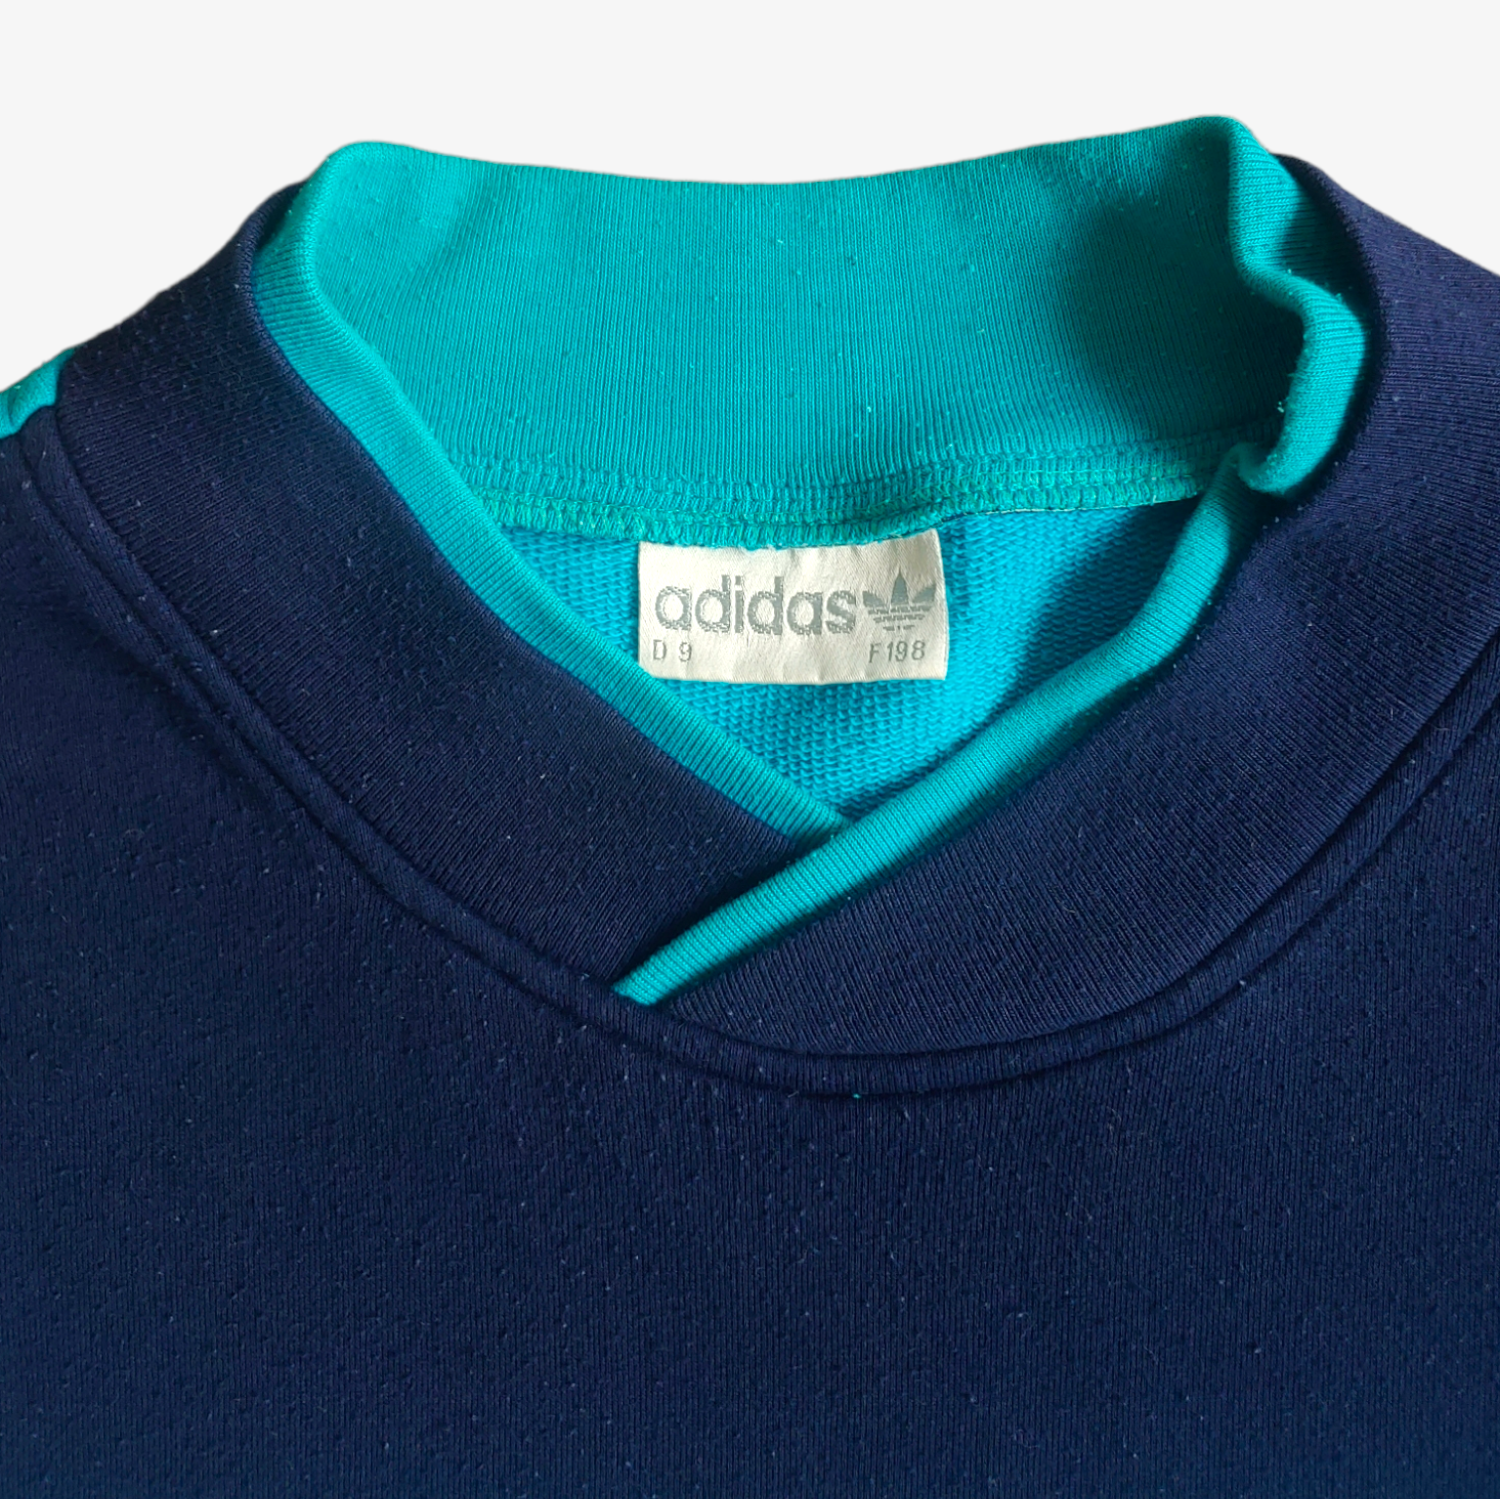 Vintage 90s Adidas 1994 Air Force Crewneck Sweatshirt Label - Casspios Dream